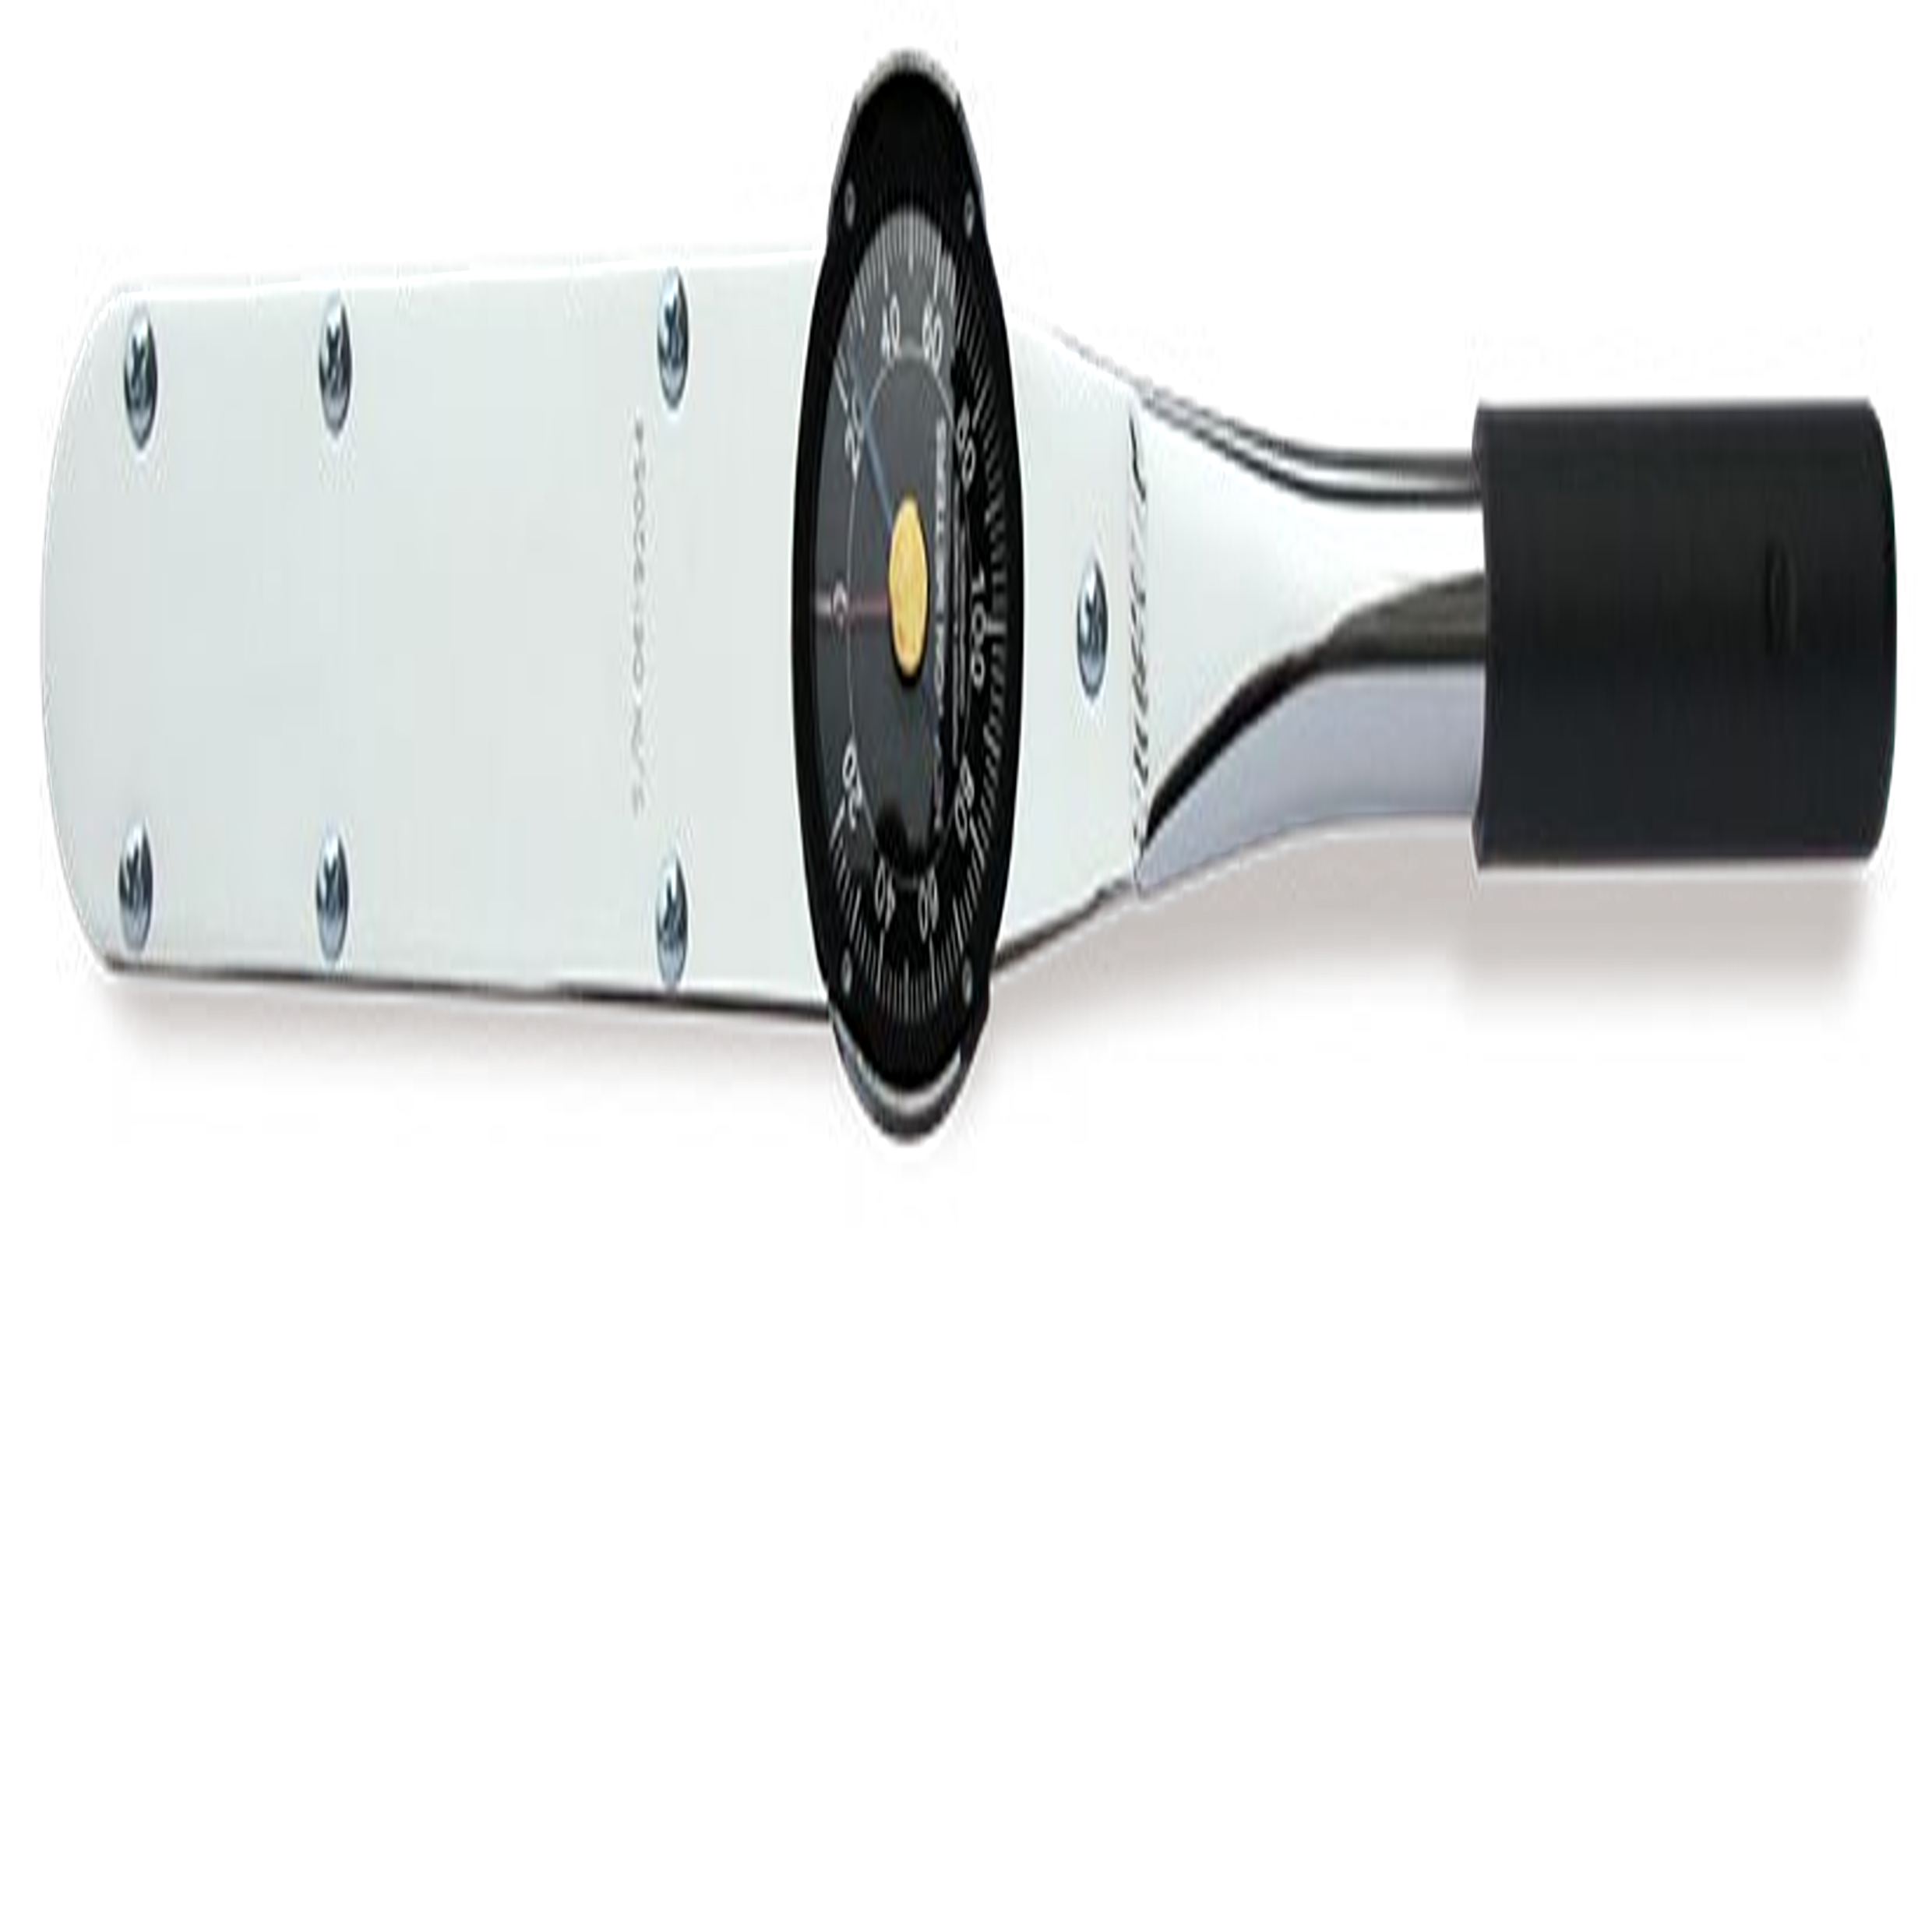 TECNOGI 2050 Dial Torque Wrench 10-50 Nm (TECNOGI Tools) - Premium Dial Torque Wrench from TECNOGI - Shop now at Yew Aik.